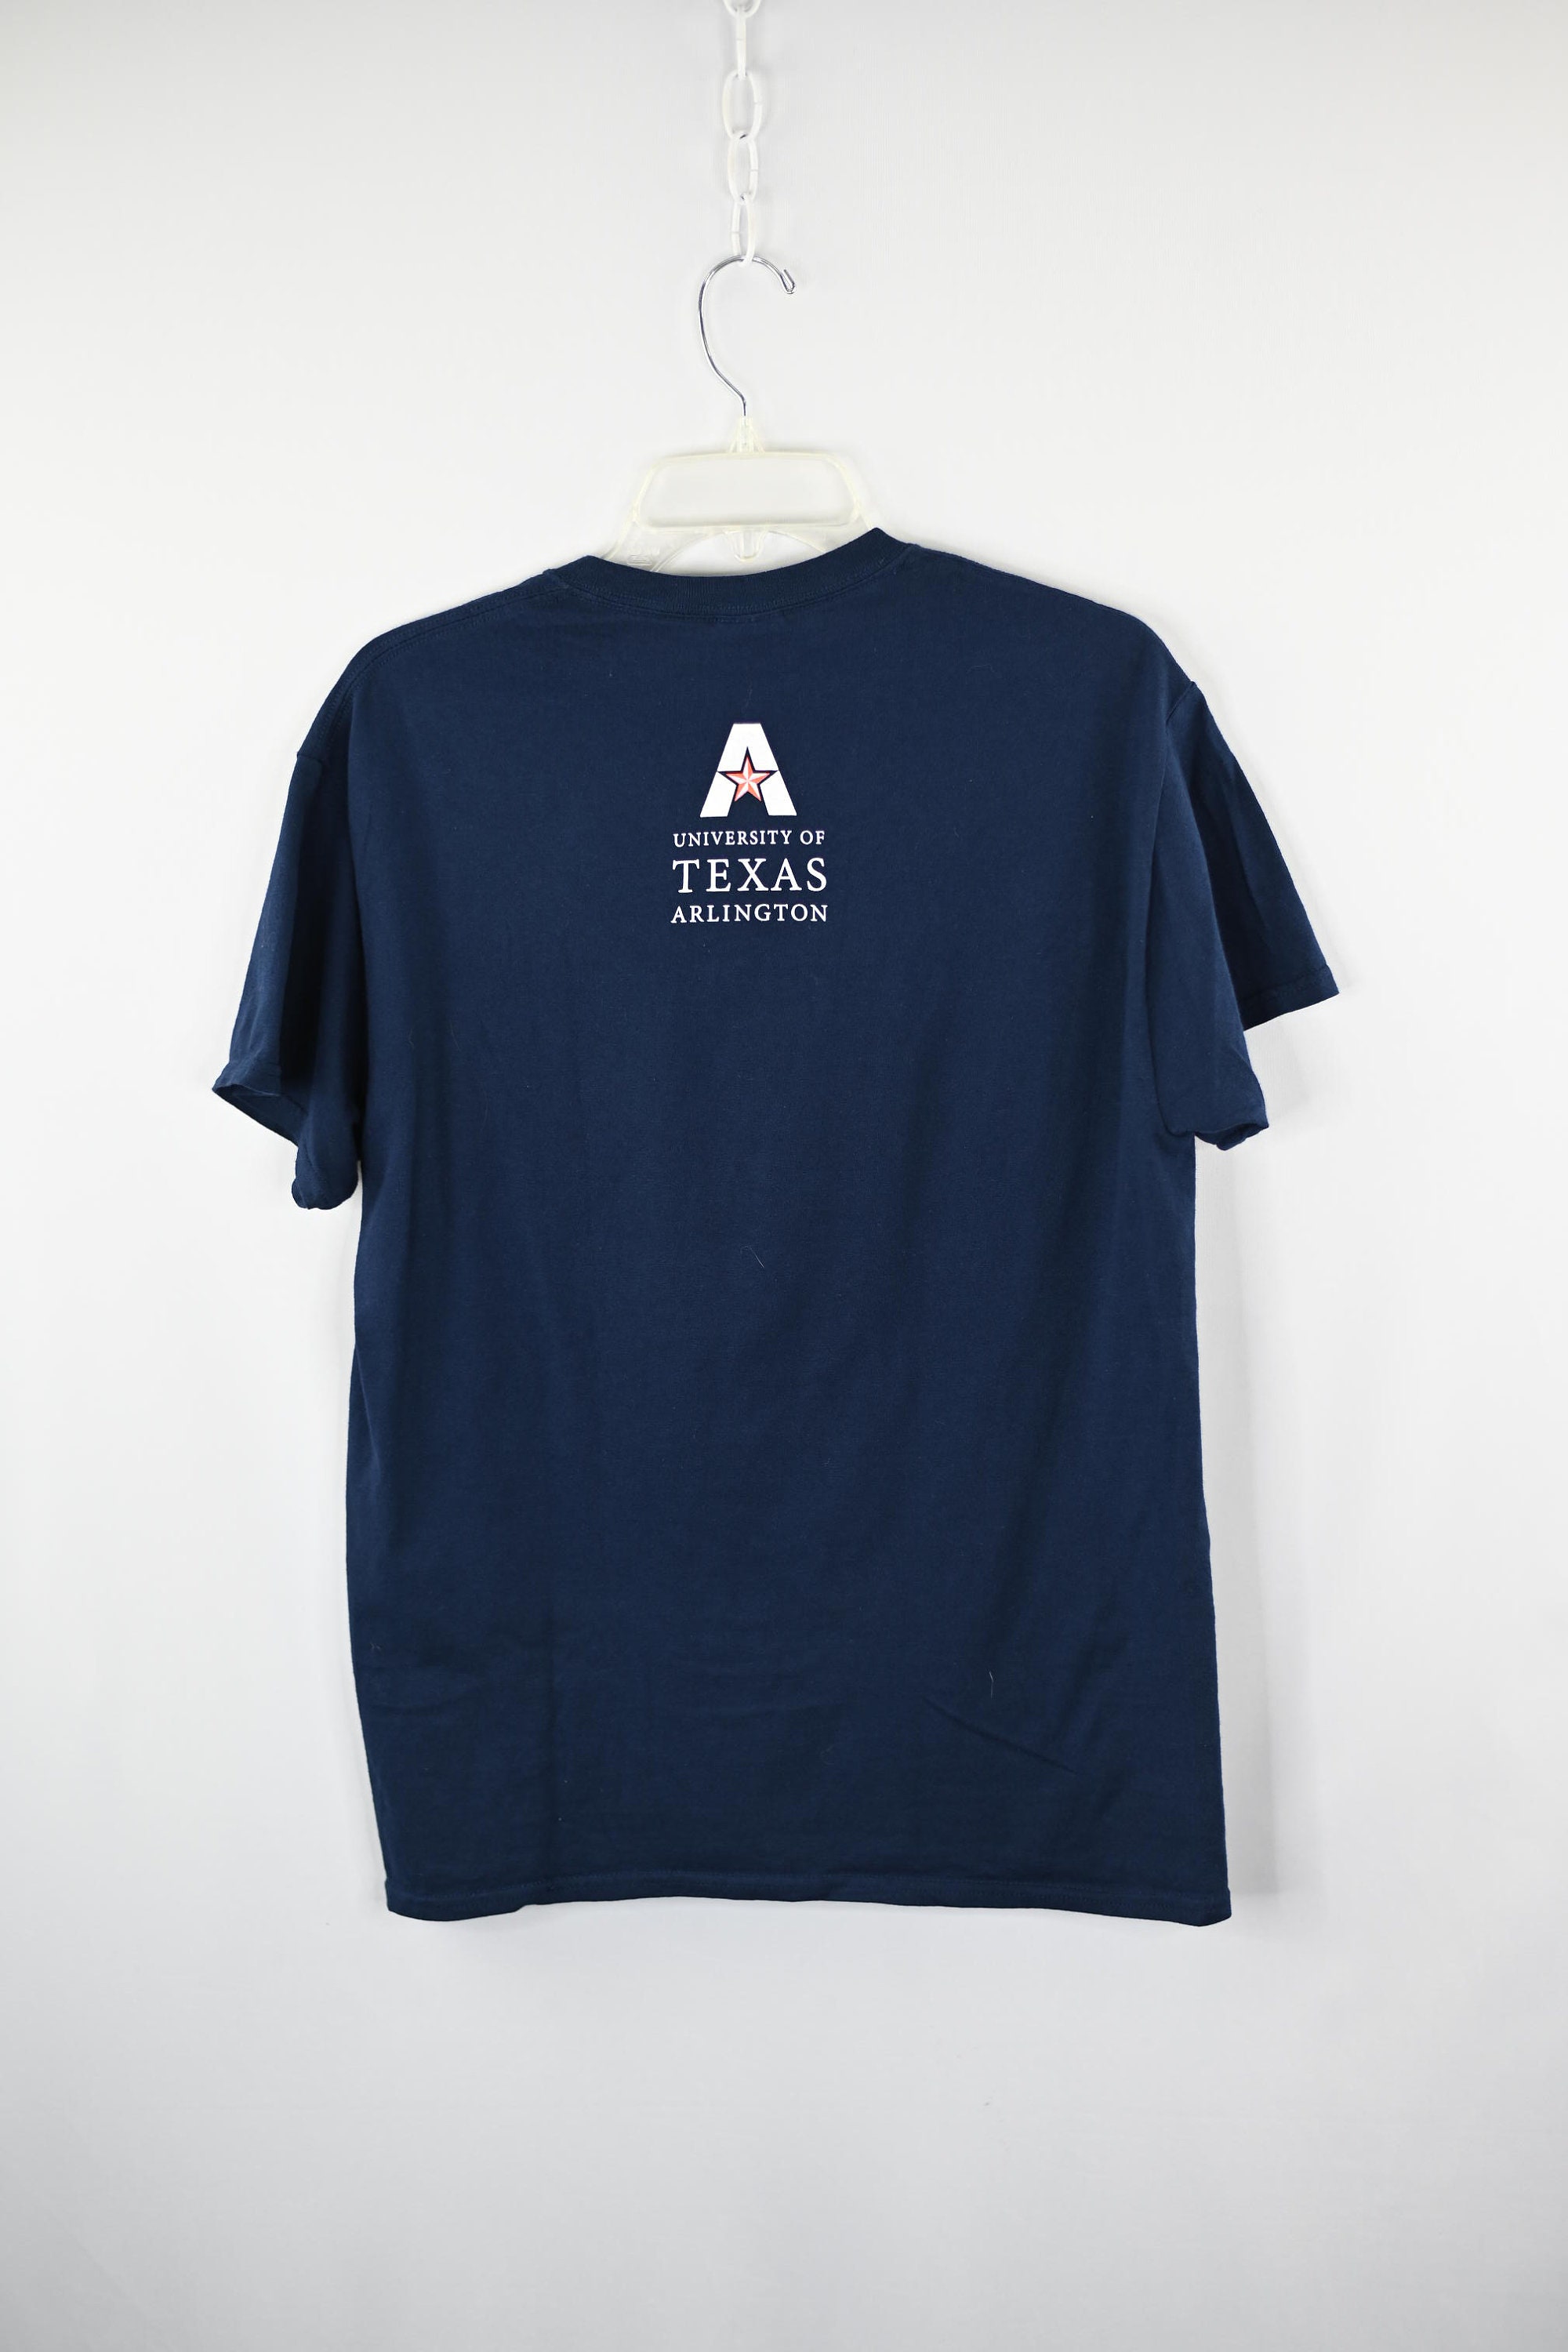 University of Texas at Arlington T-Shirt Size M | Etsy